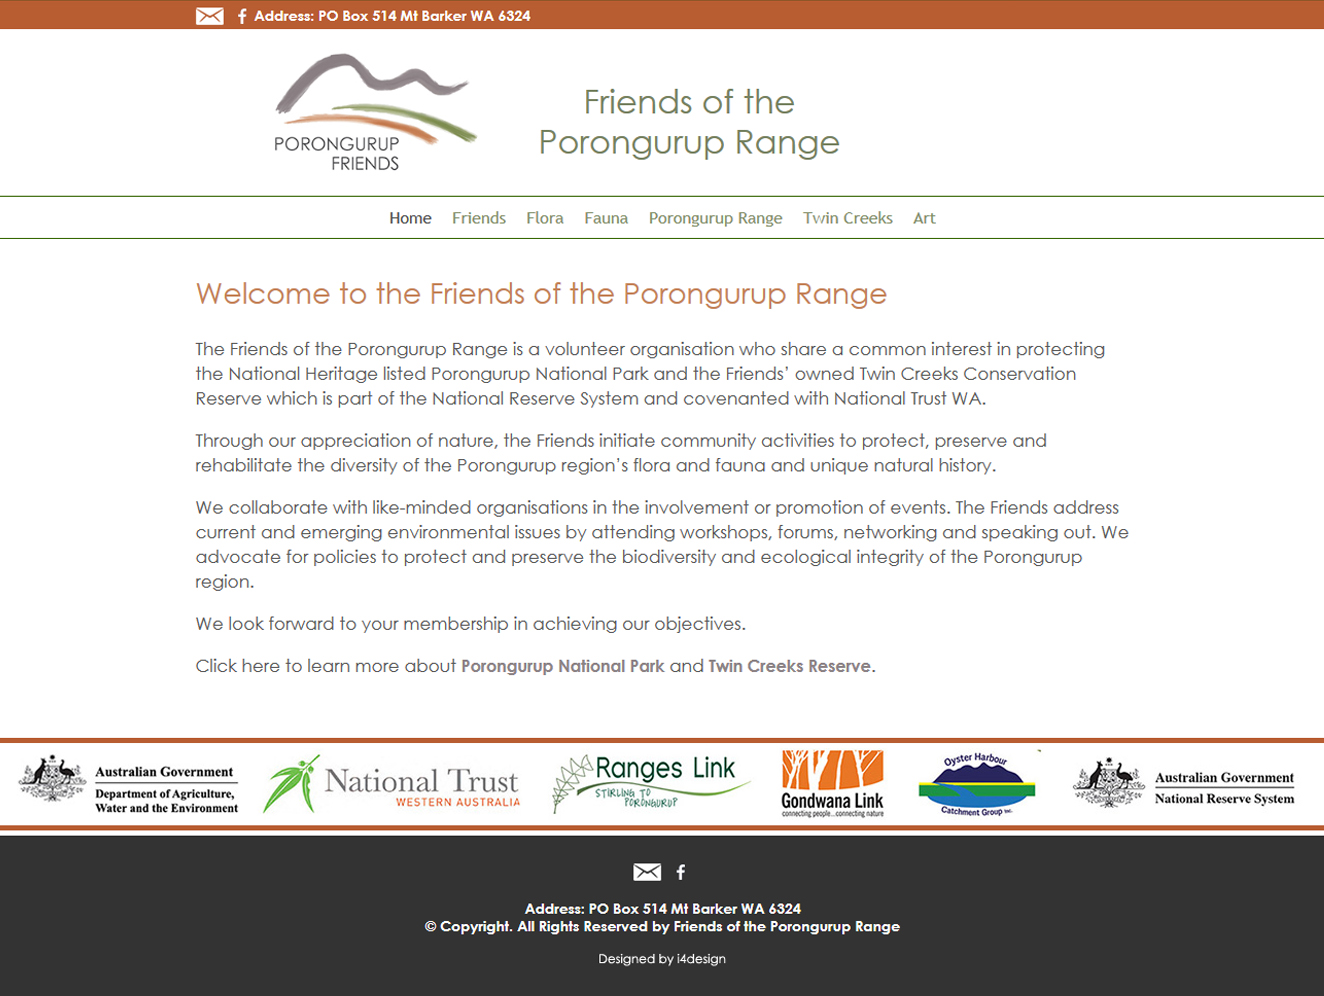 Friends of the Porongurup Range